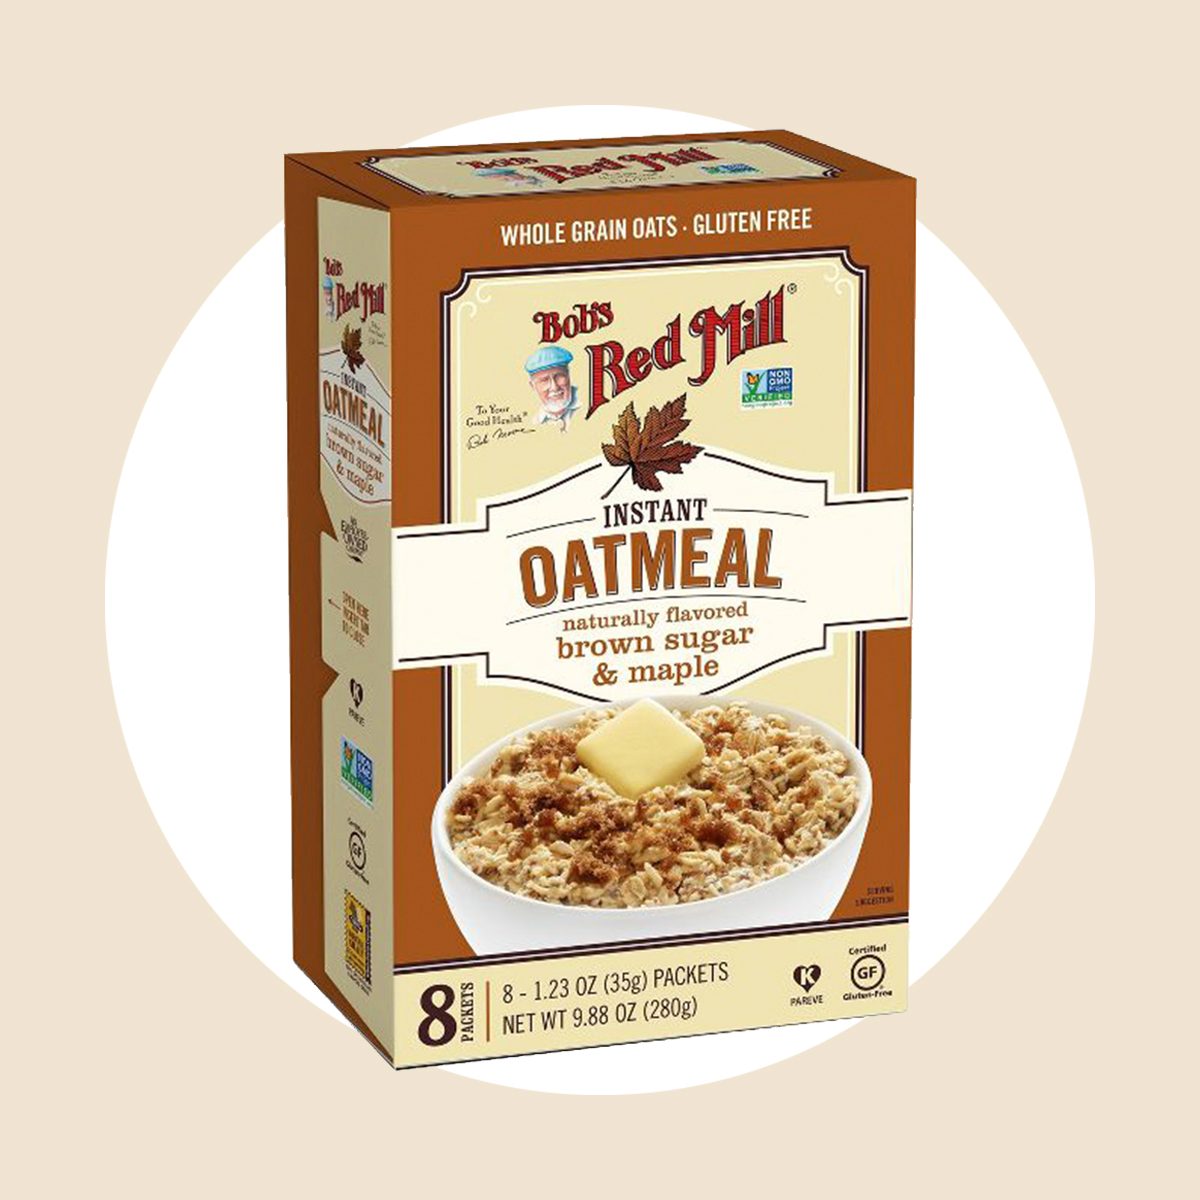 https://www.tasteofhome.com/wp-content/uploads/2022/02/bobs-red-mill-oatmeal-via-target.com-ecomm.jpg?fit=700%2C700